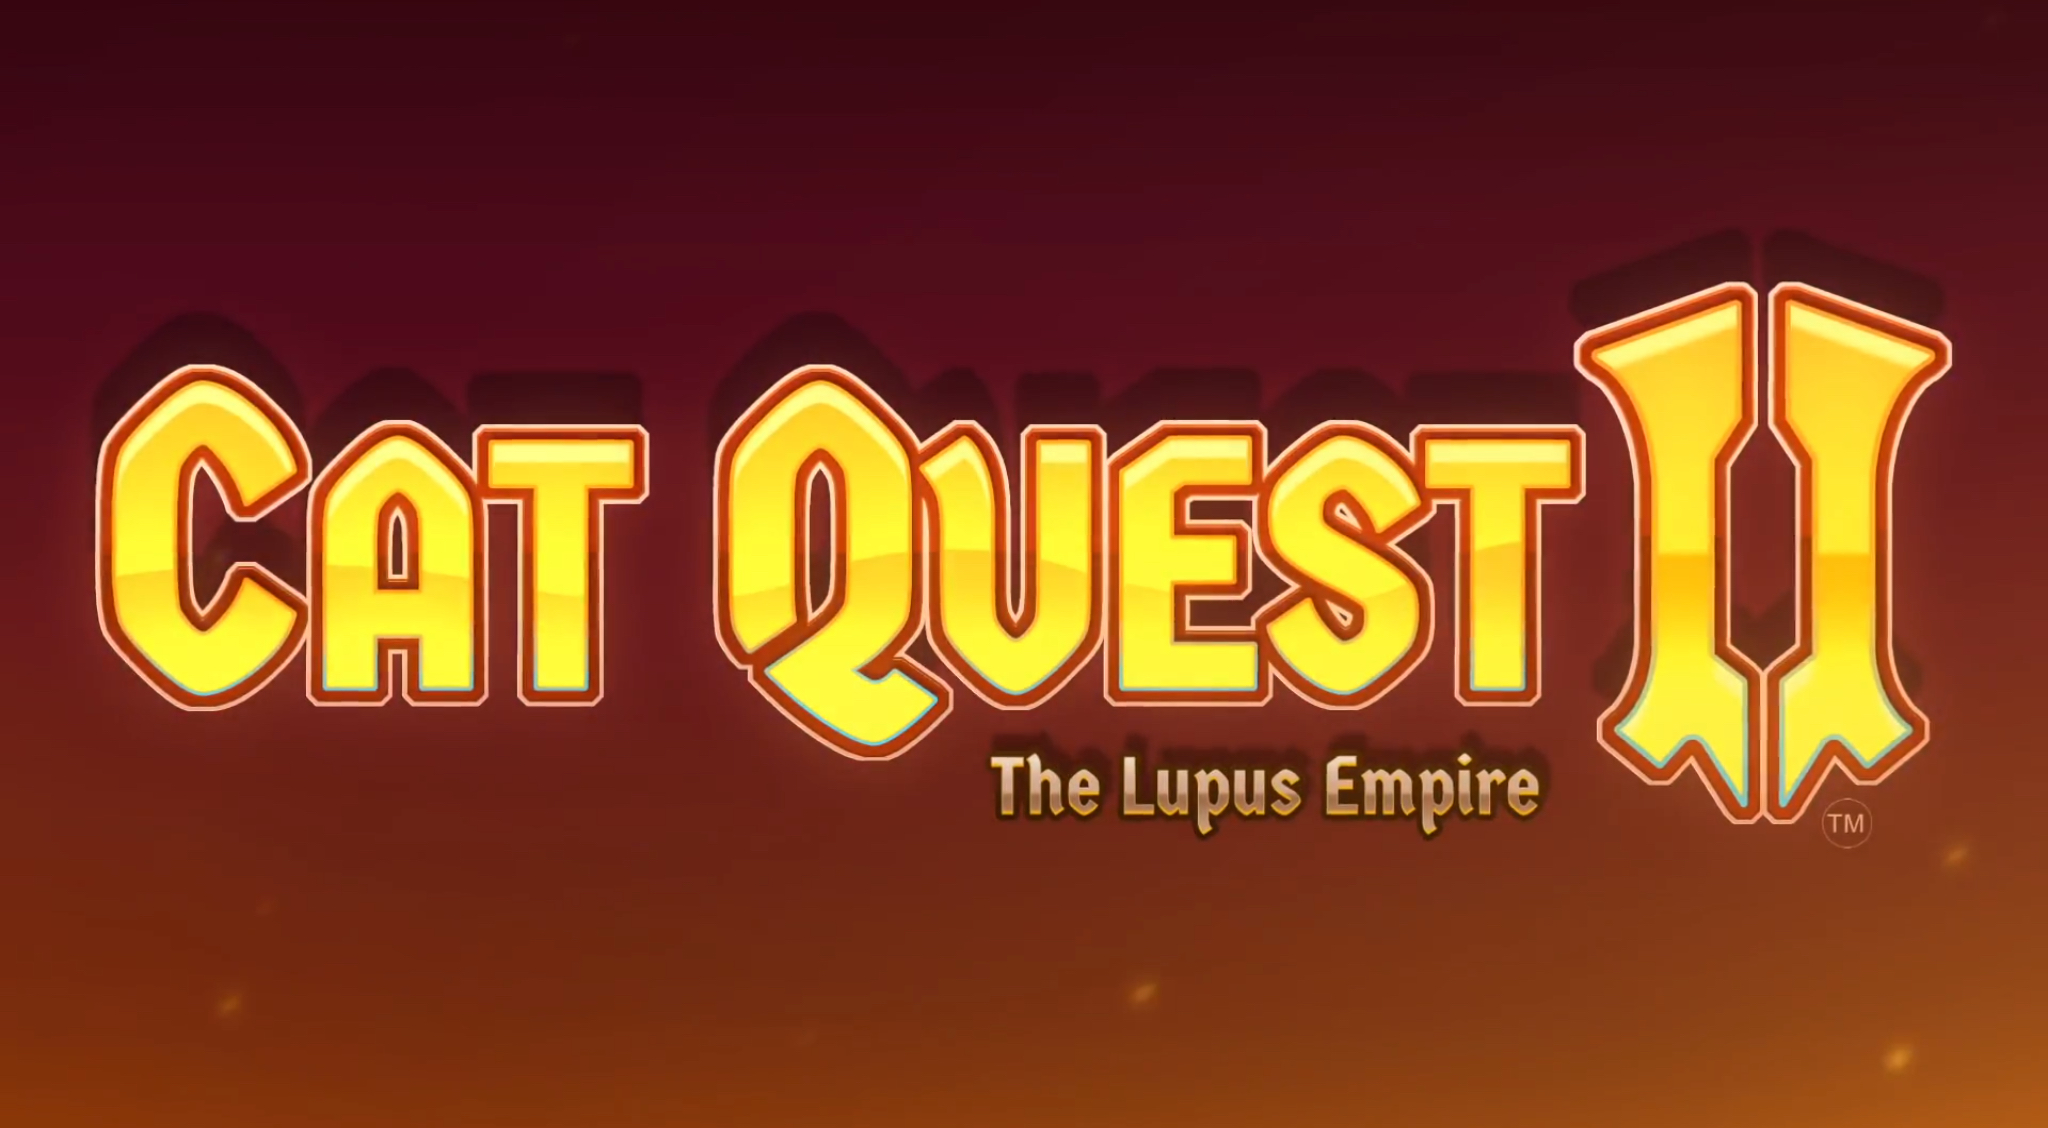 Cat Quest. Кэт квест. Cat Quest 2. Cat Quest 2 the Lupus Empire. Quest 2 трансляция